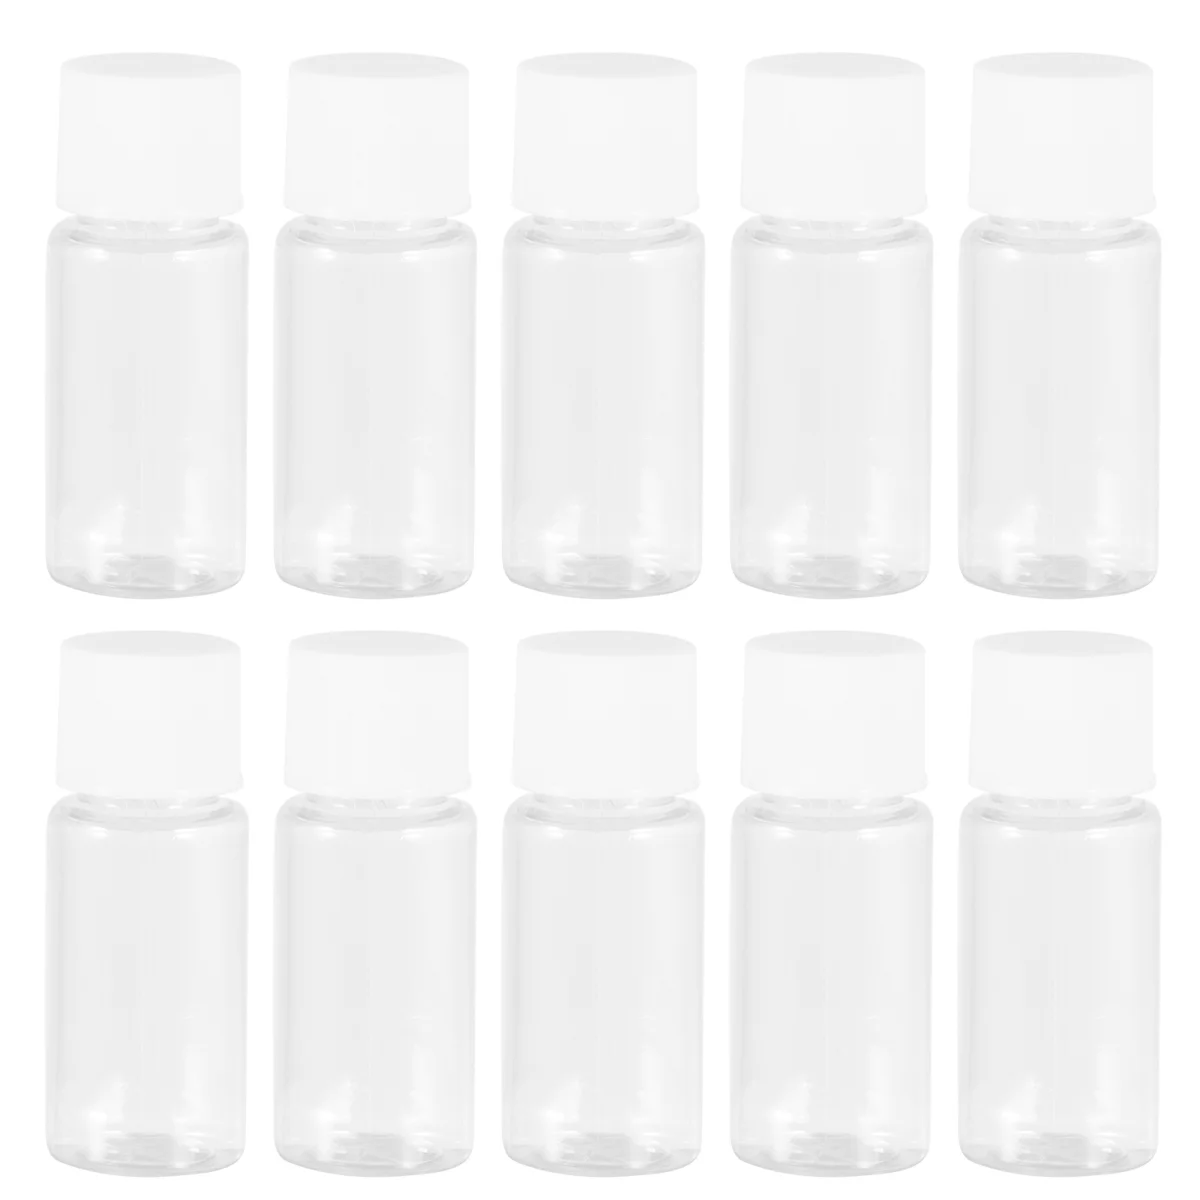 

Bottles Mini Bottle Sample Liquidempty Dispenser Travel Refillable Lotionoil Transparent Essential Shampoo Bulk Containers